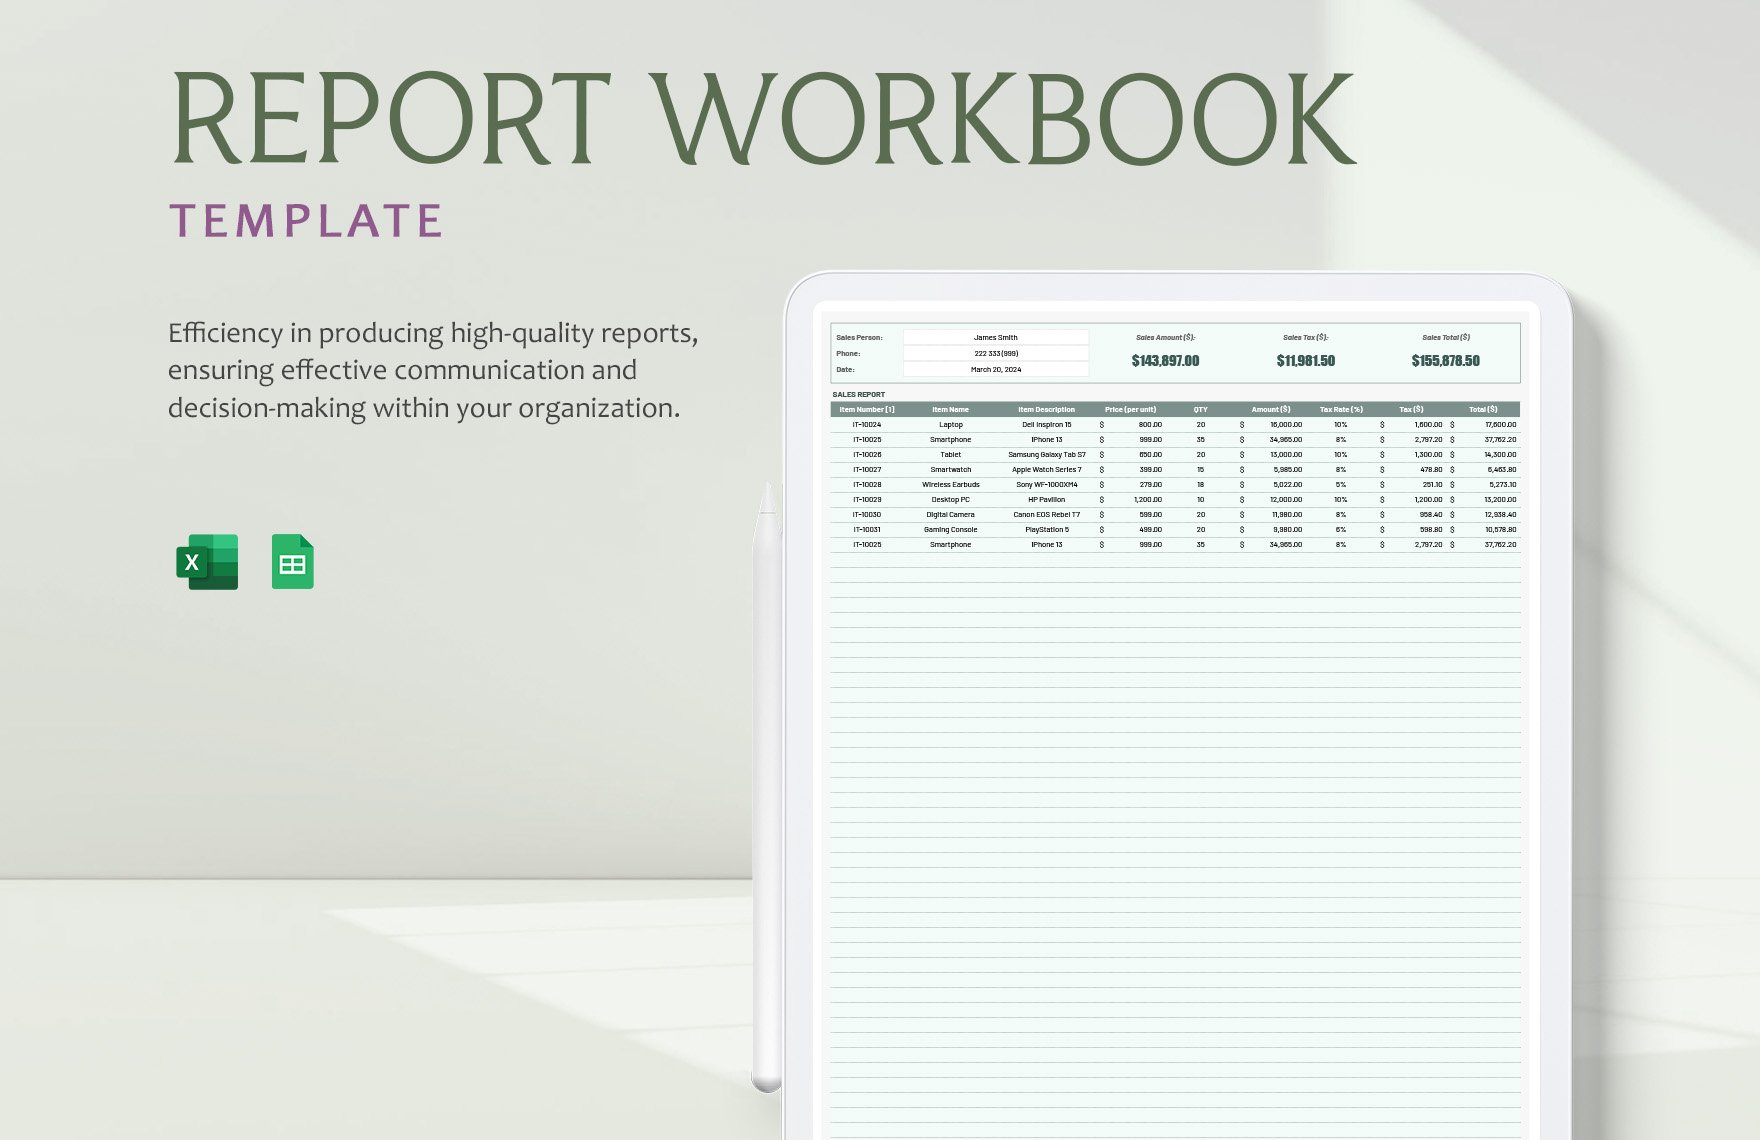 Report Workbook Template in Excel, Google Sheets